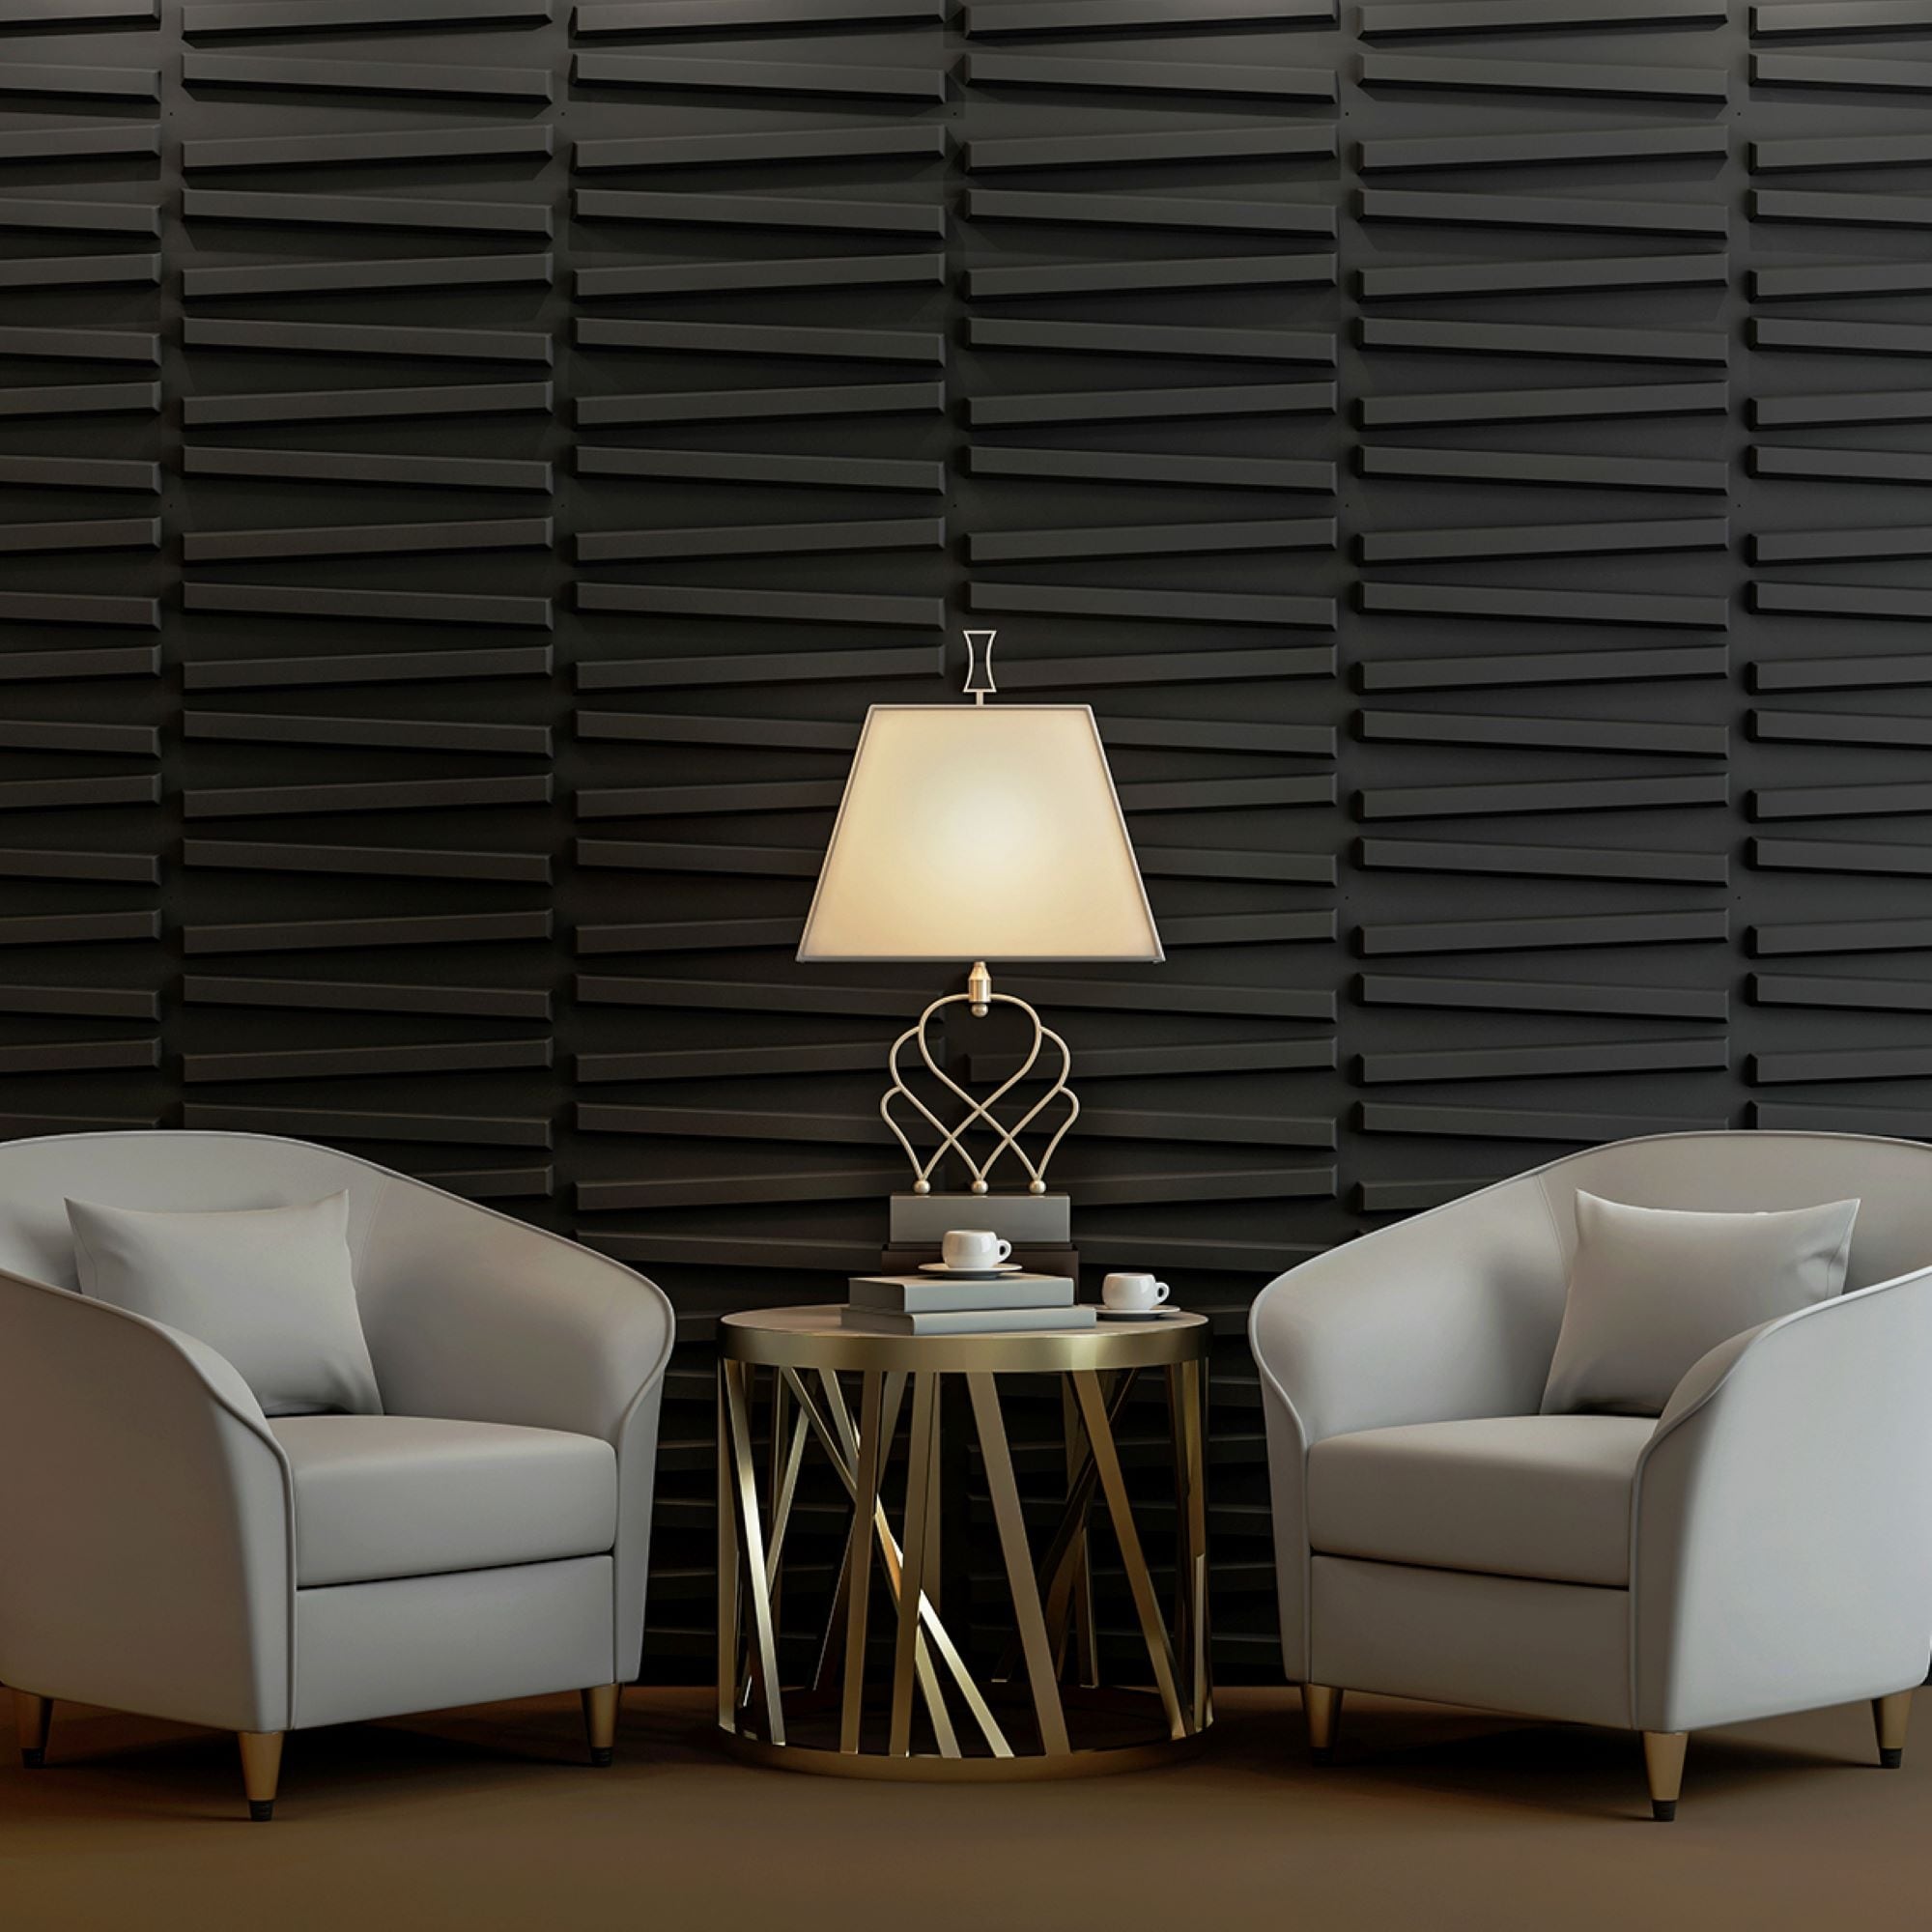 Art3d® Decorative 3D Wall Panels PVC Diamond Design Black Silver Wall Pack  of 12 Tiles Cover 25 Sq Ft. 